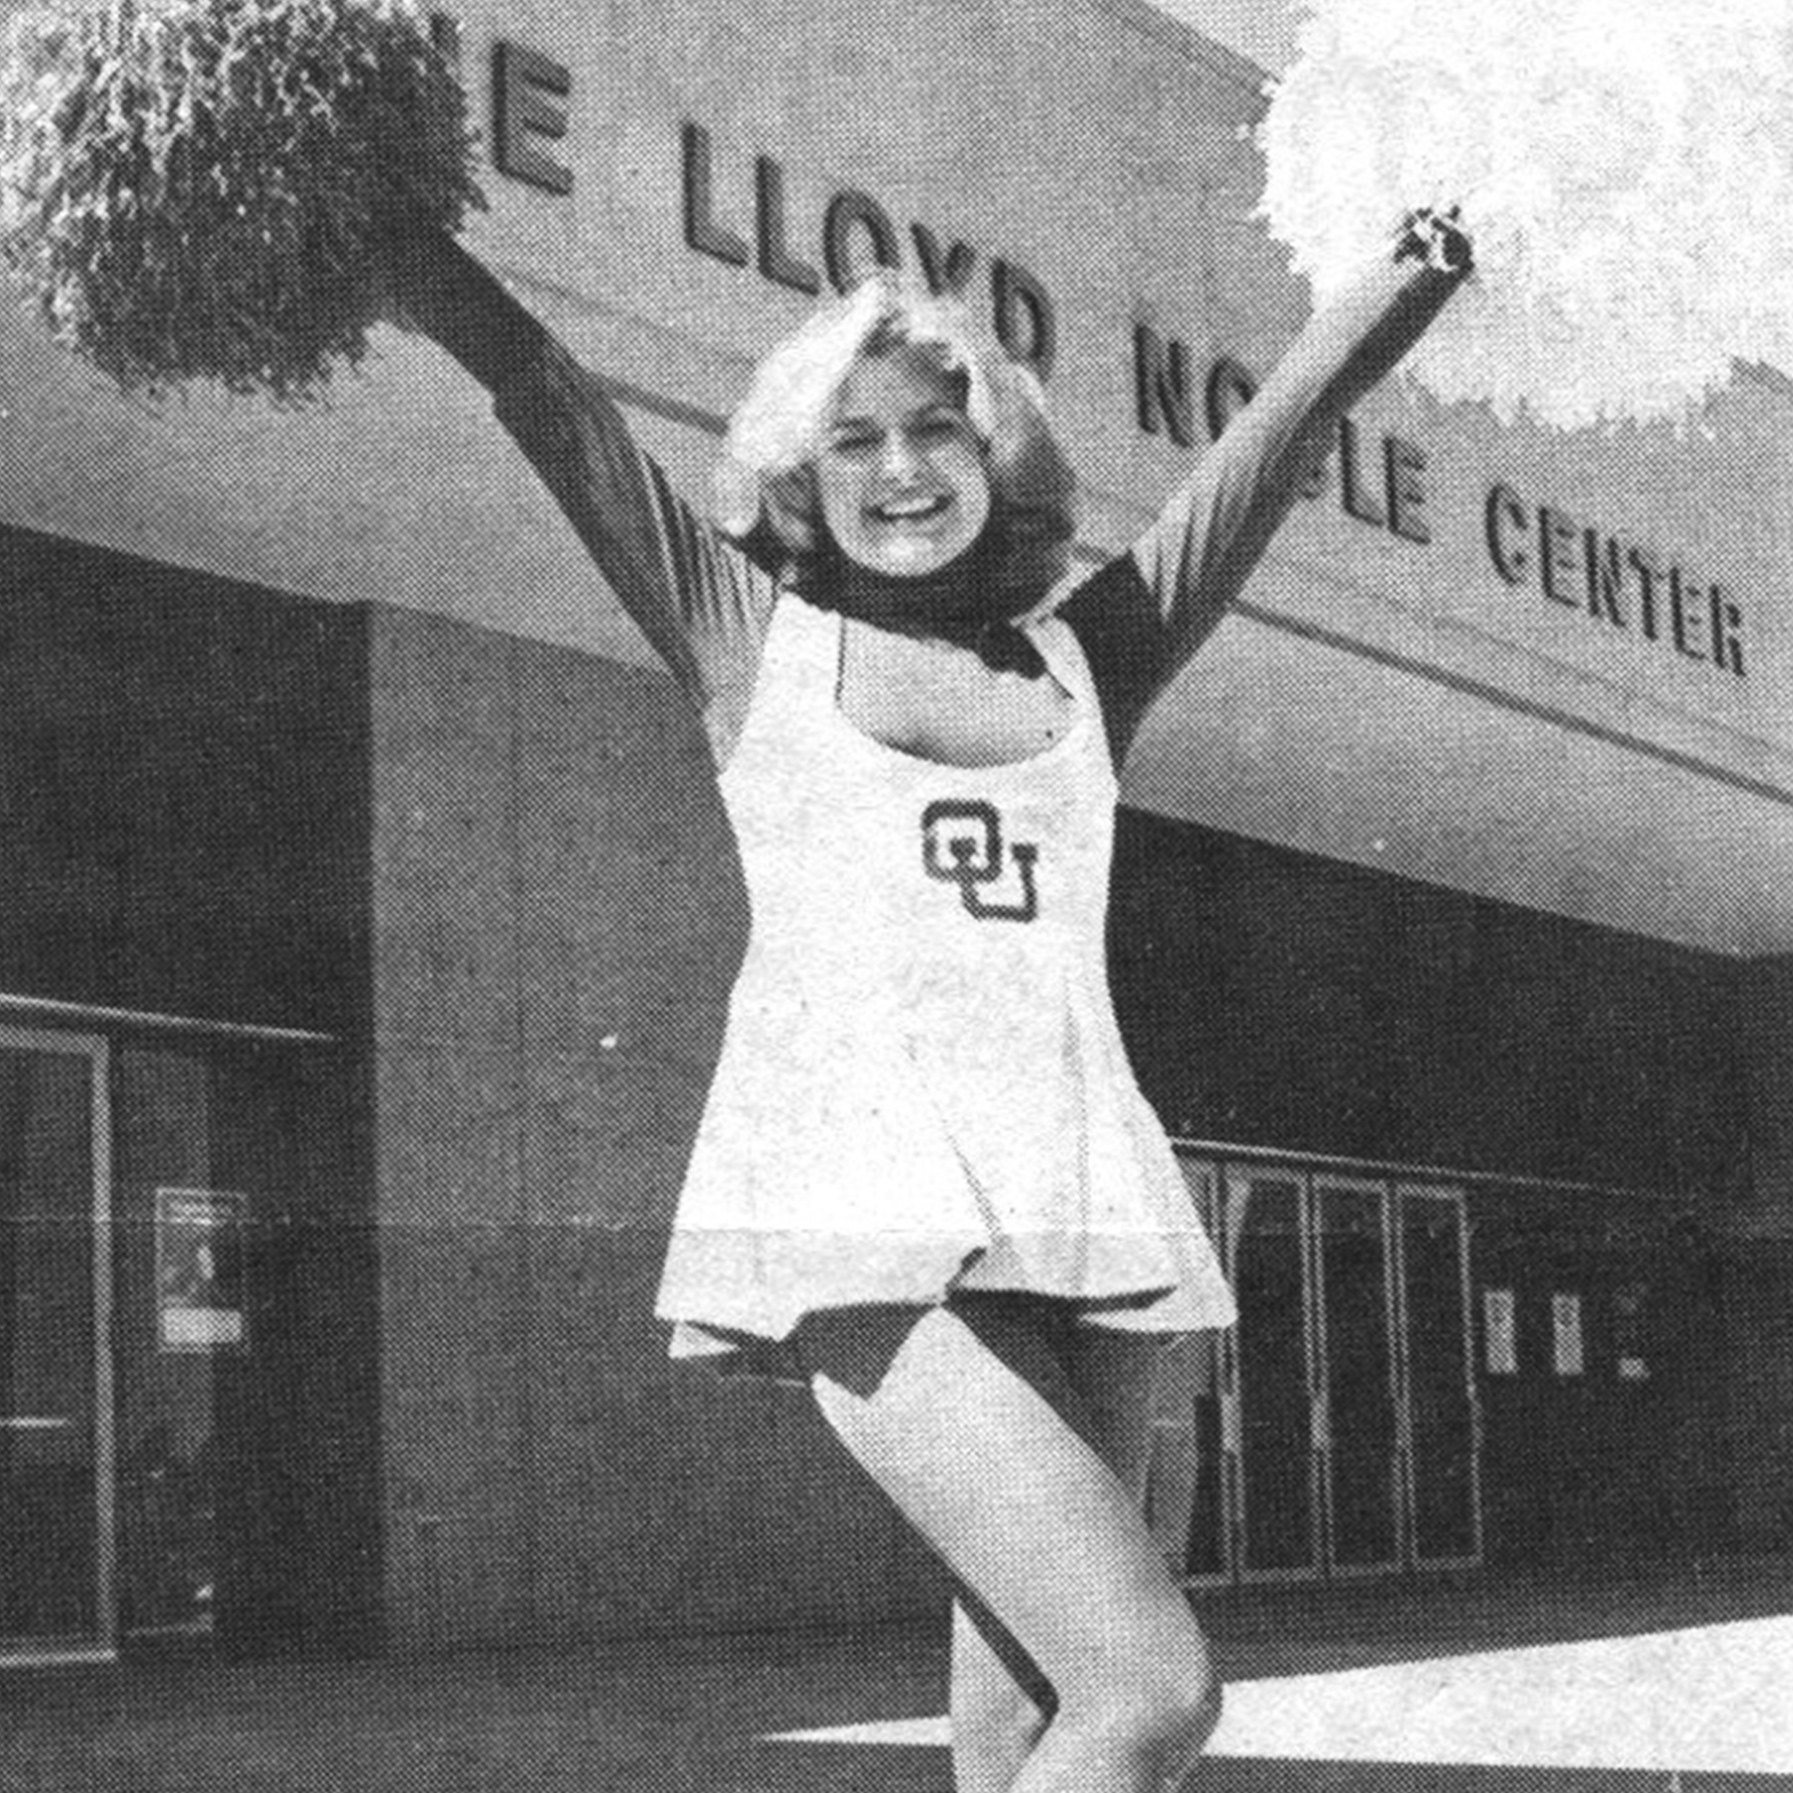 Ms. Turney Cheerleading for University of Oklahoma 